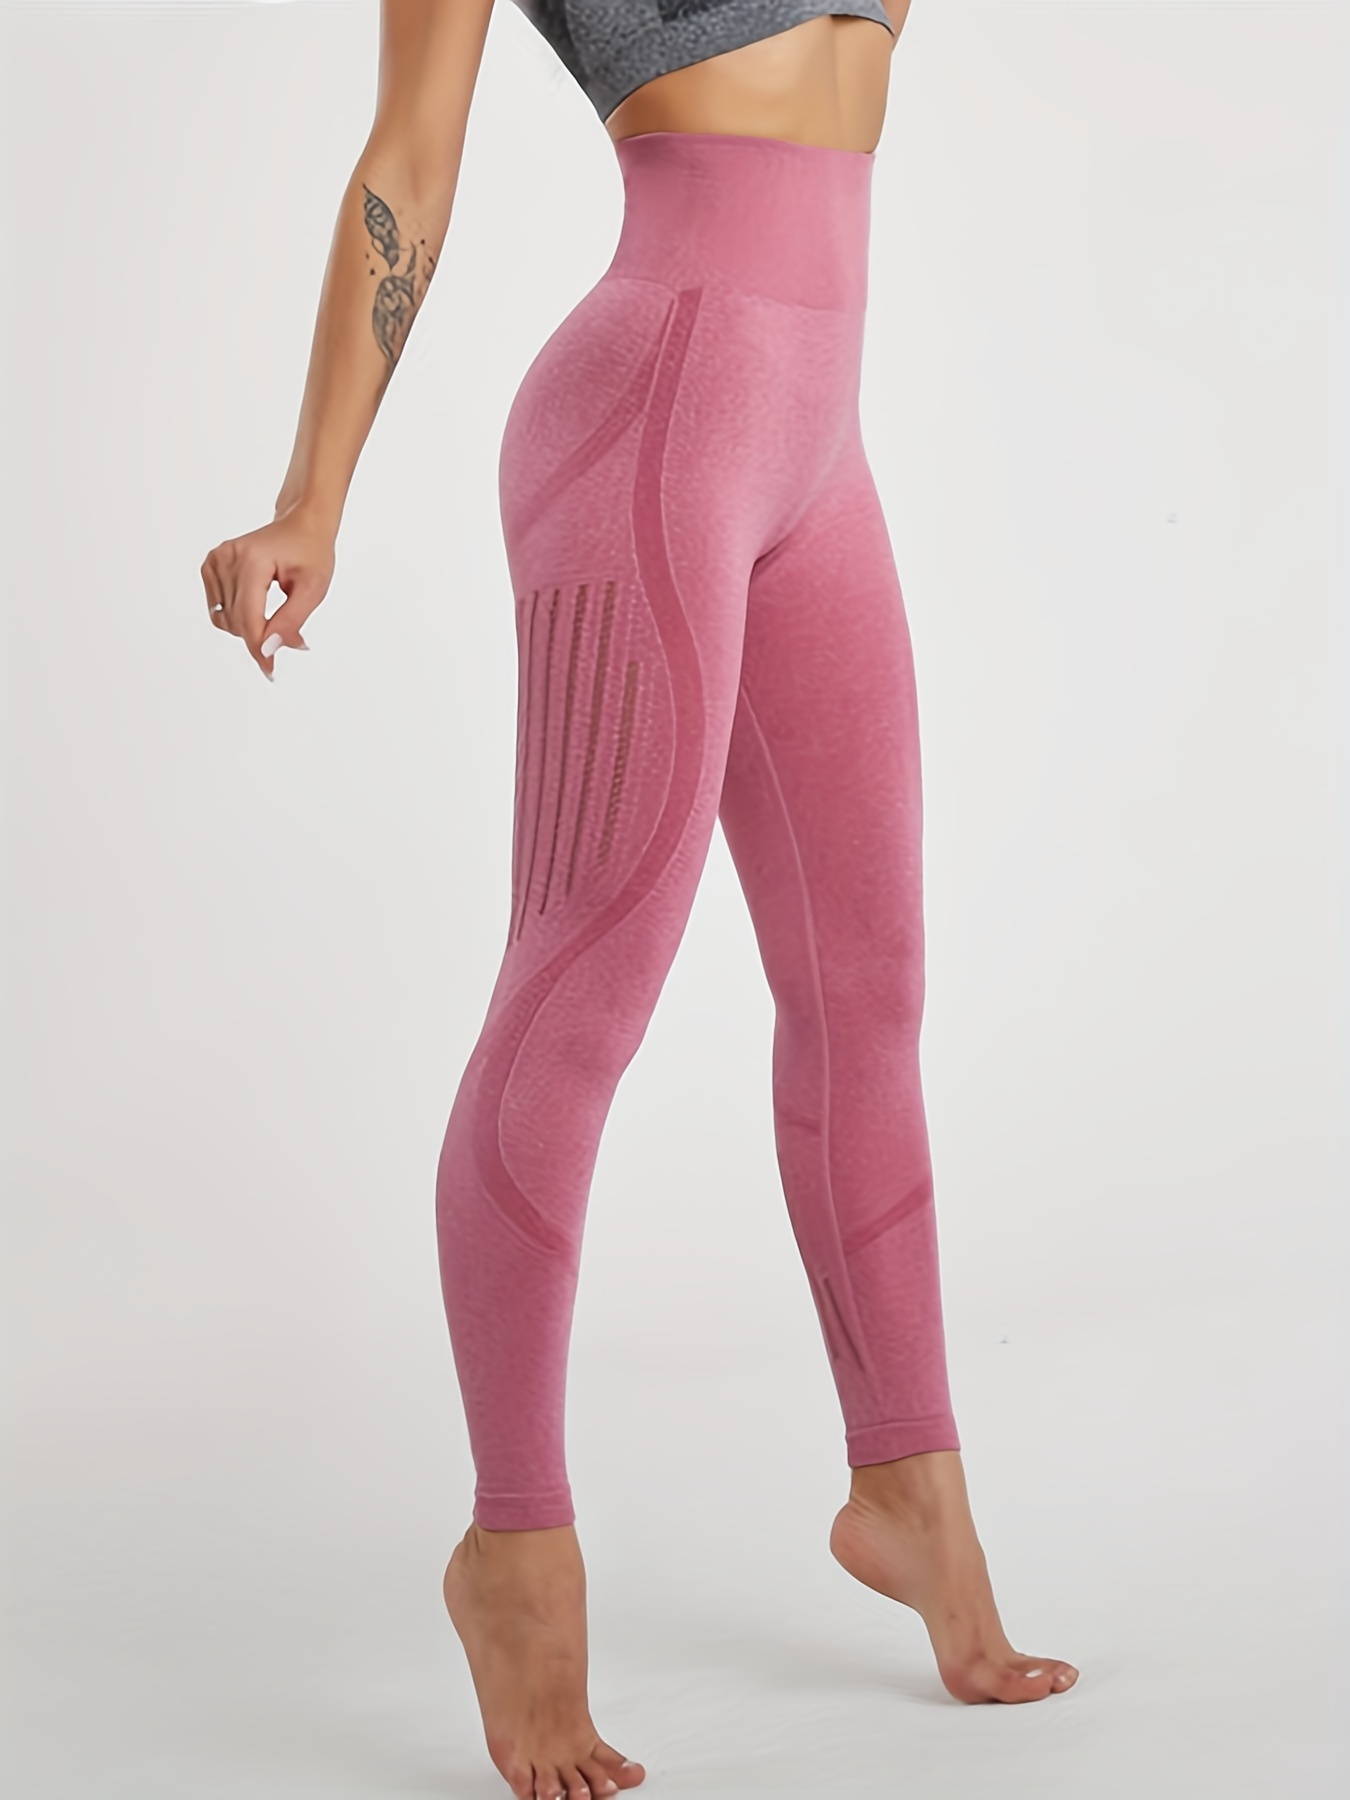 Pantalones De Yoga Para Mujer, Mallas Para Fitness, Cintura Alta